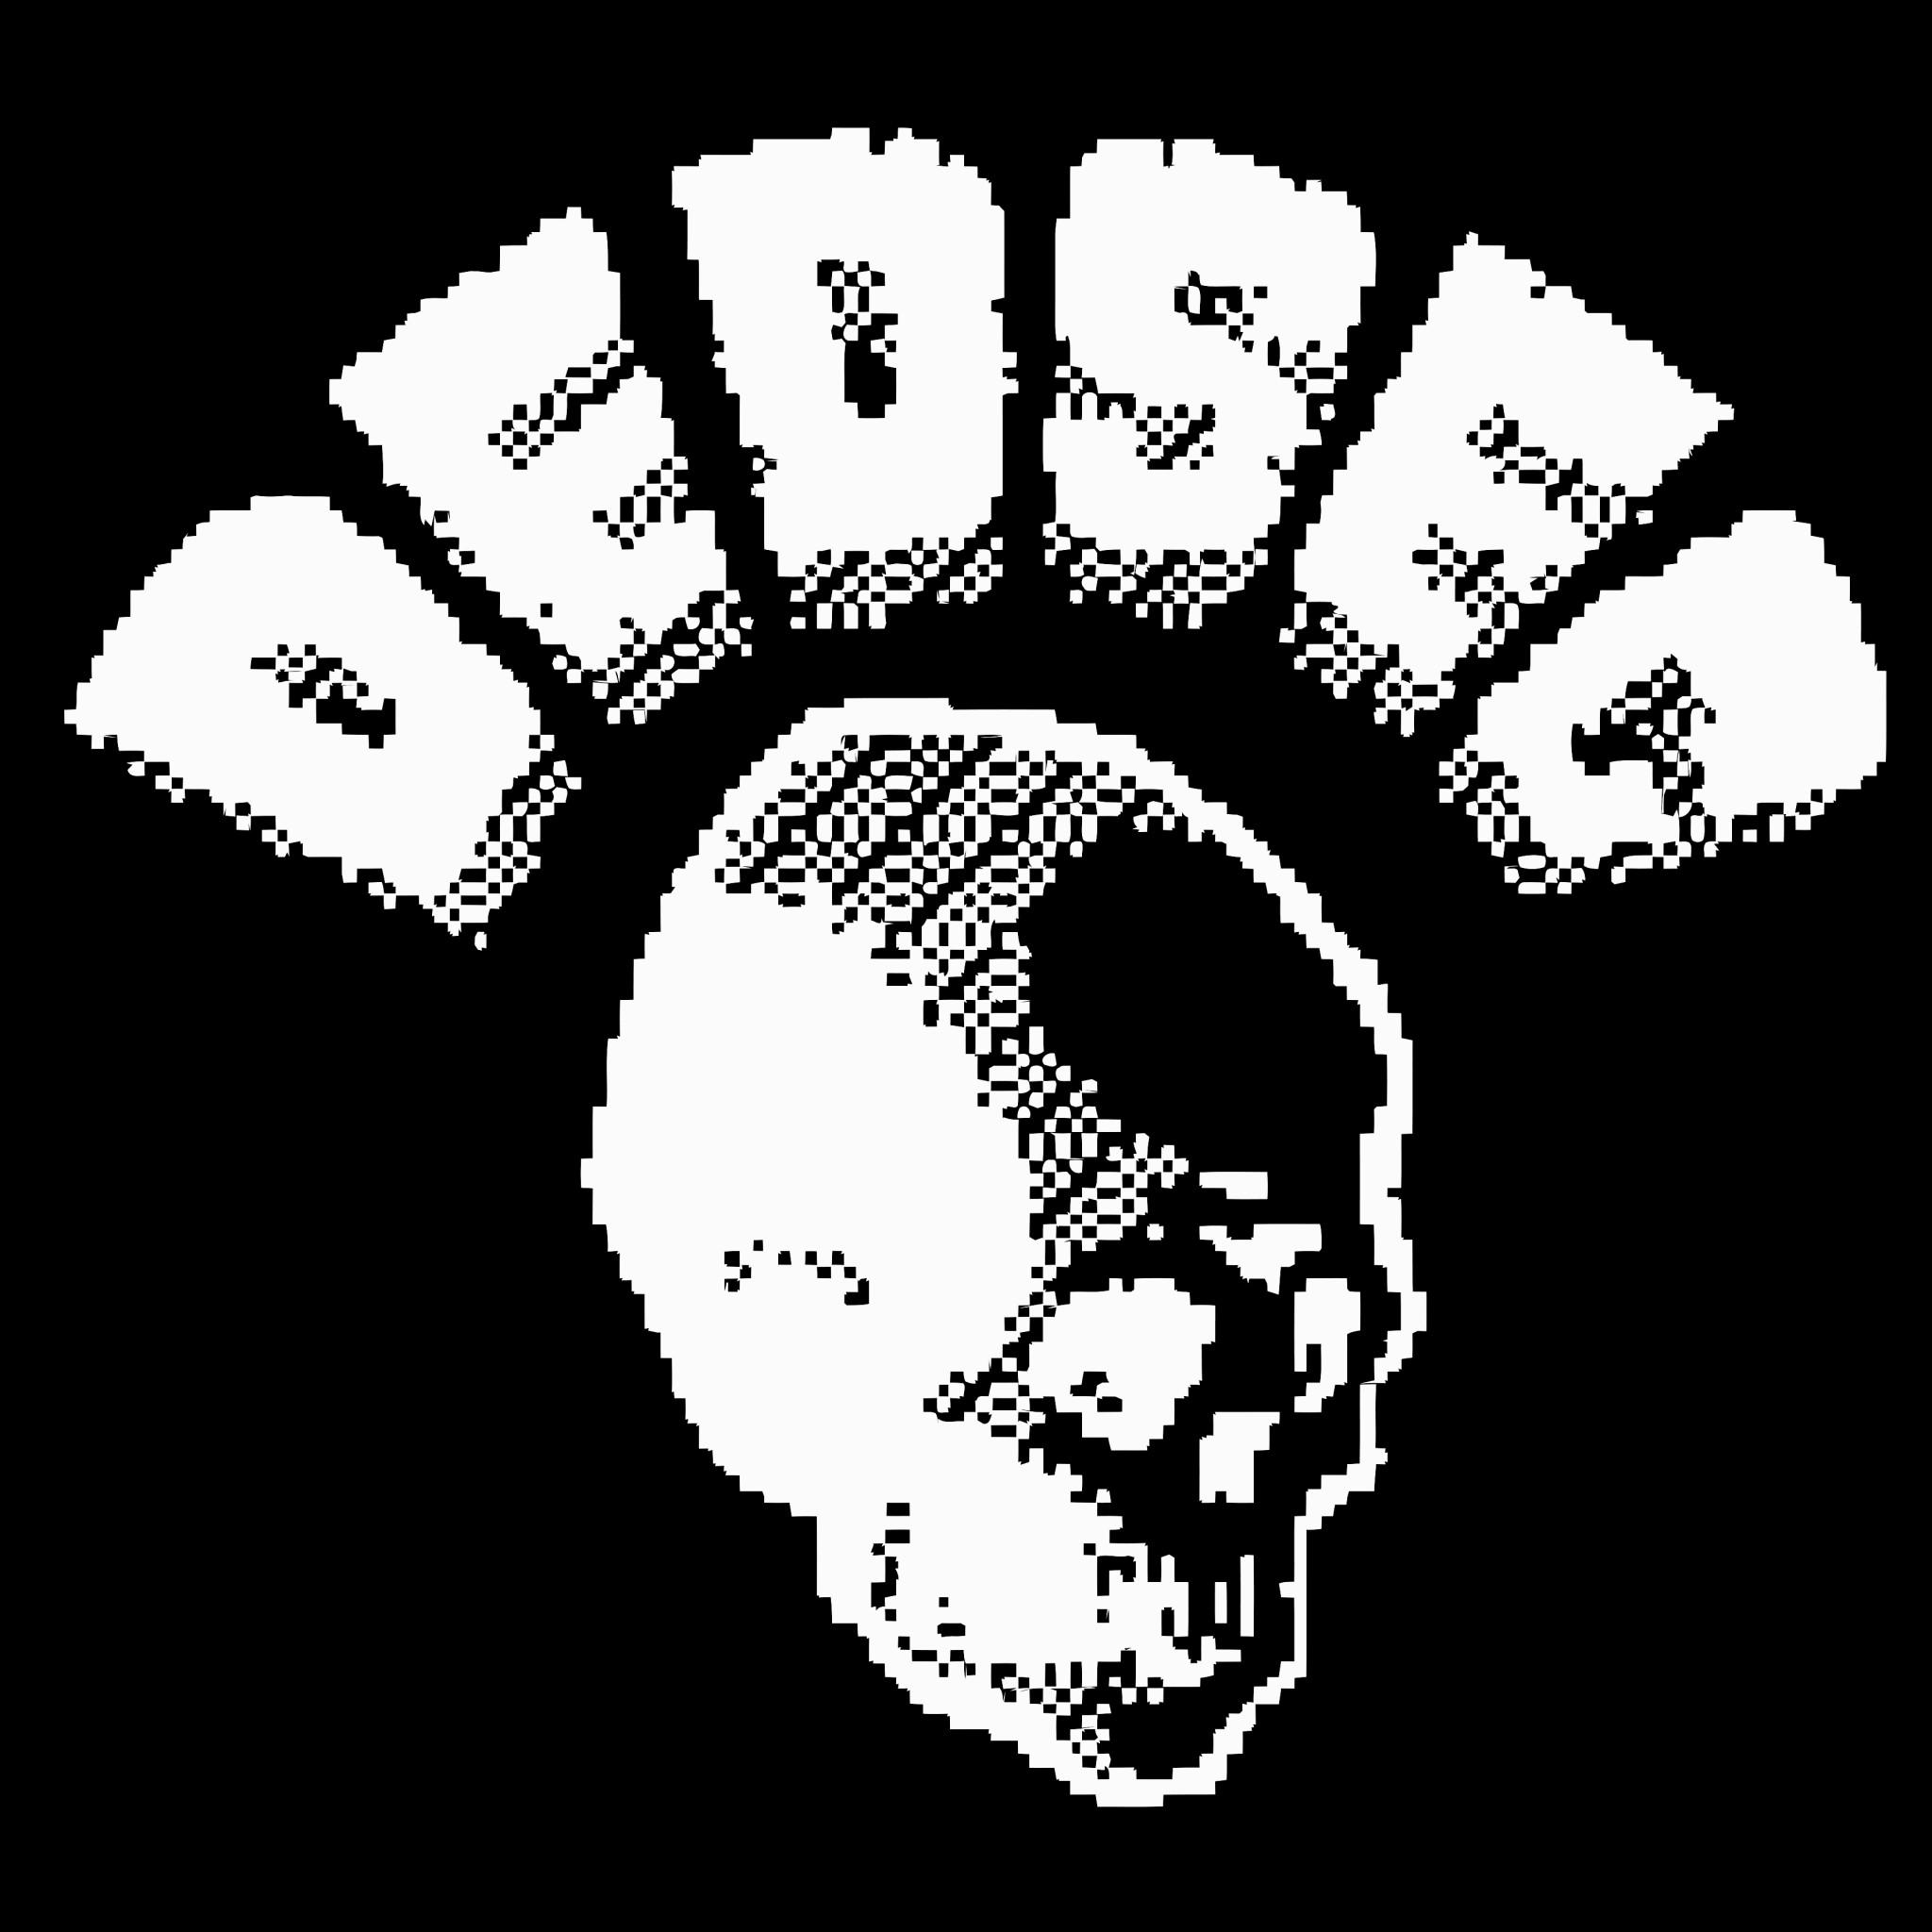 Download Dedsec Logo 2048 x 2048 Wallpaper dogs